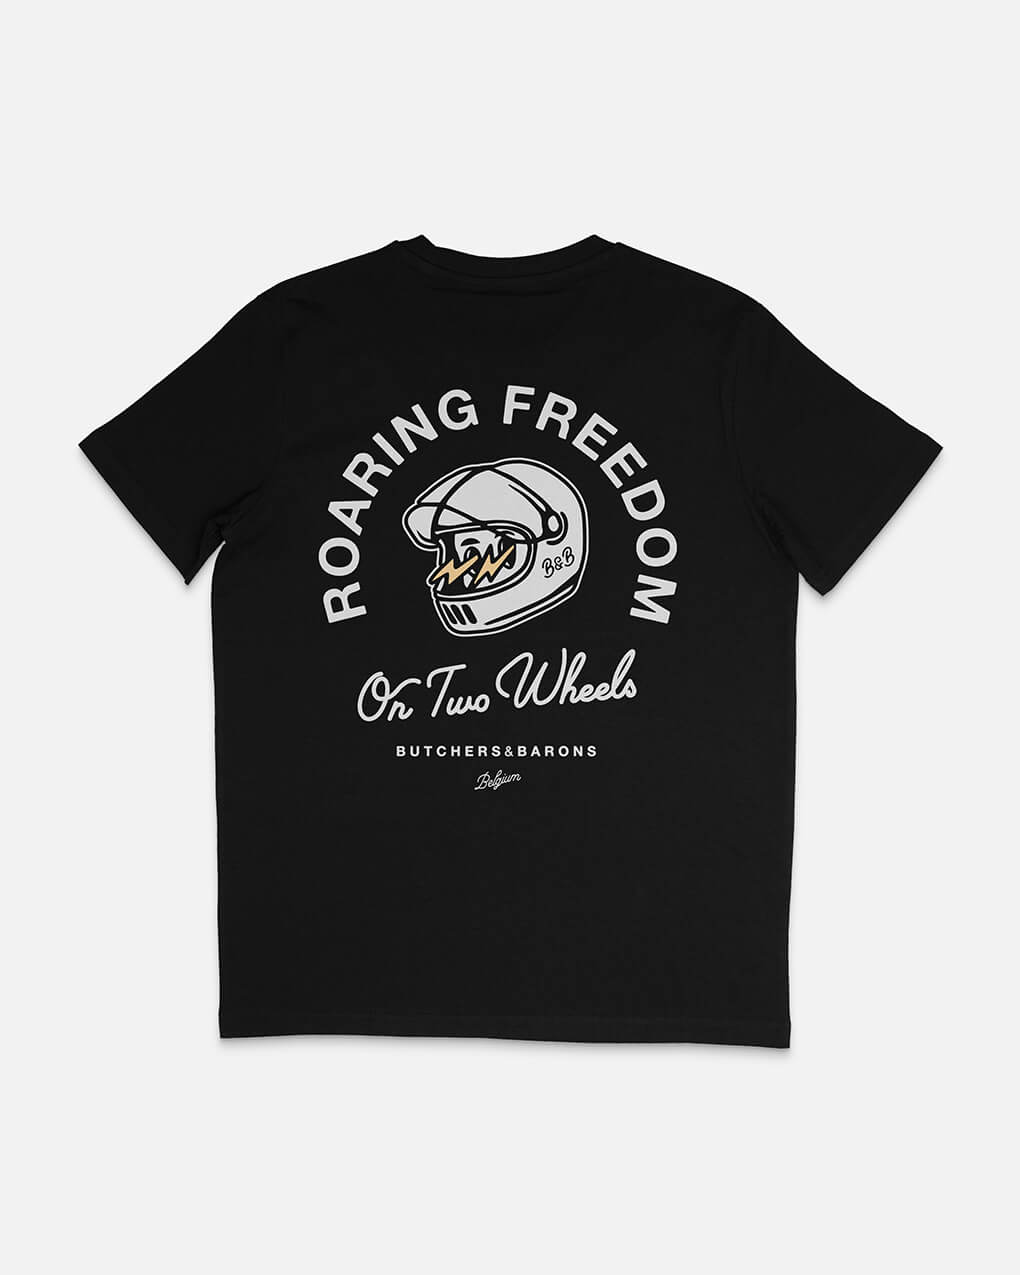 Roaring Freedom on two wheels - Butchers & Barons t-shirt